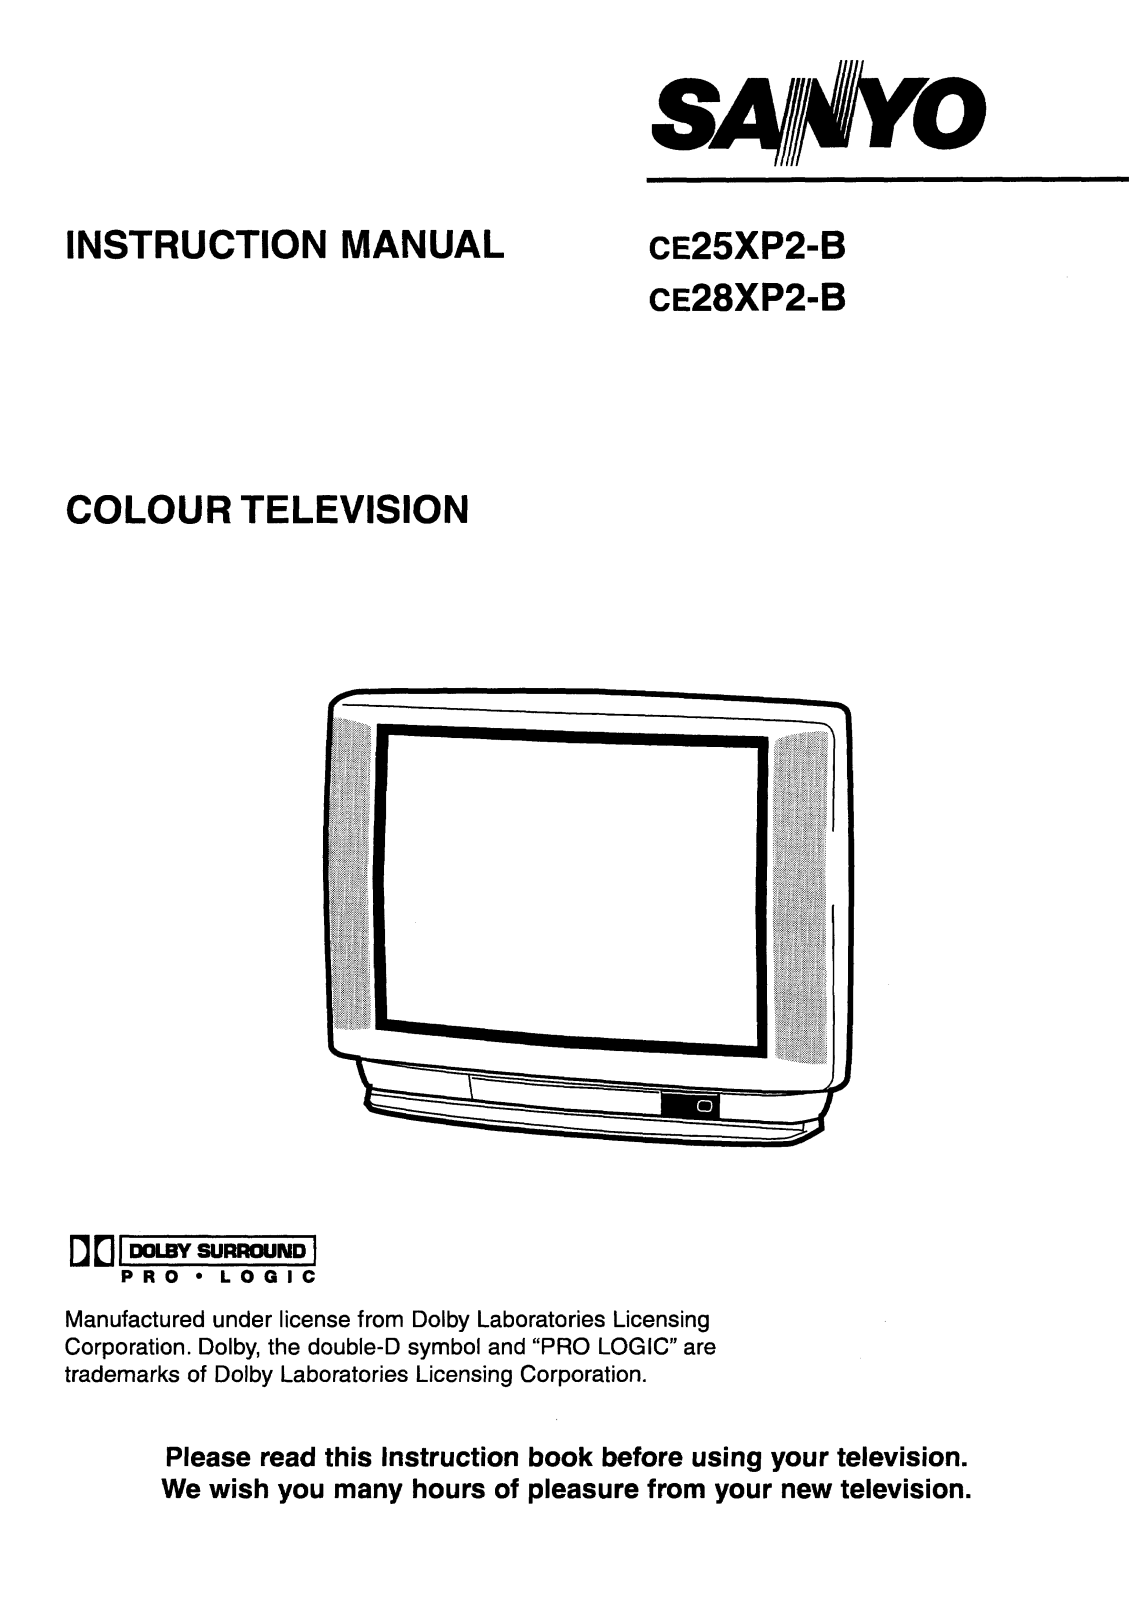 Sanyo CE25XP2-B, CE28XP2-B Instruction Manual